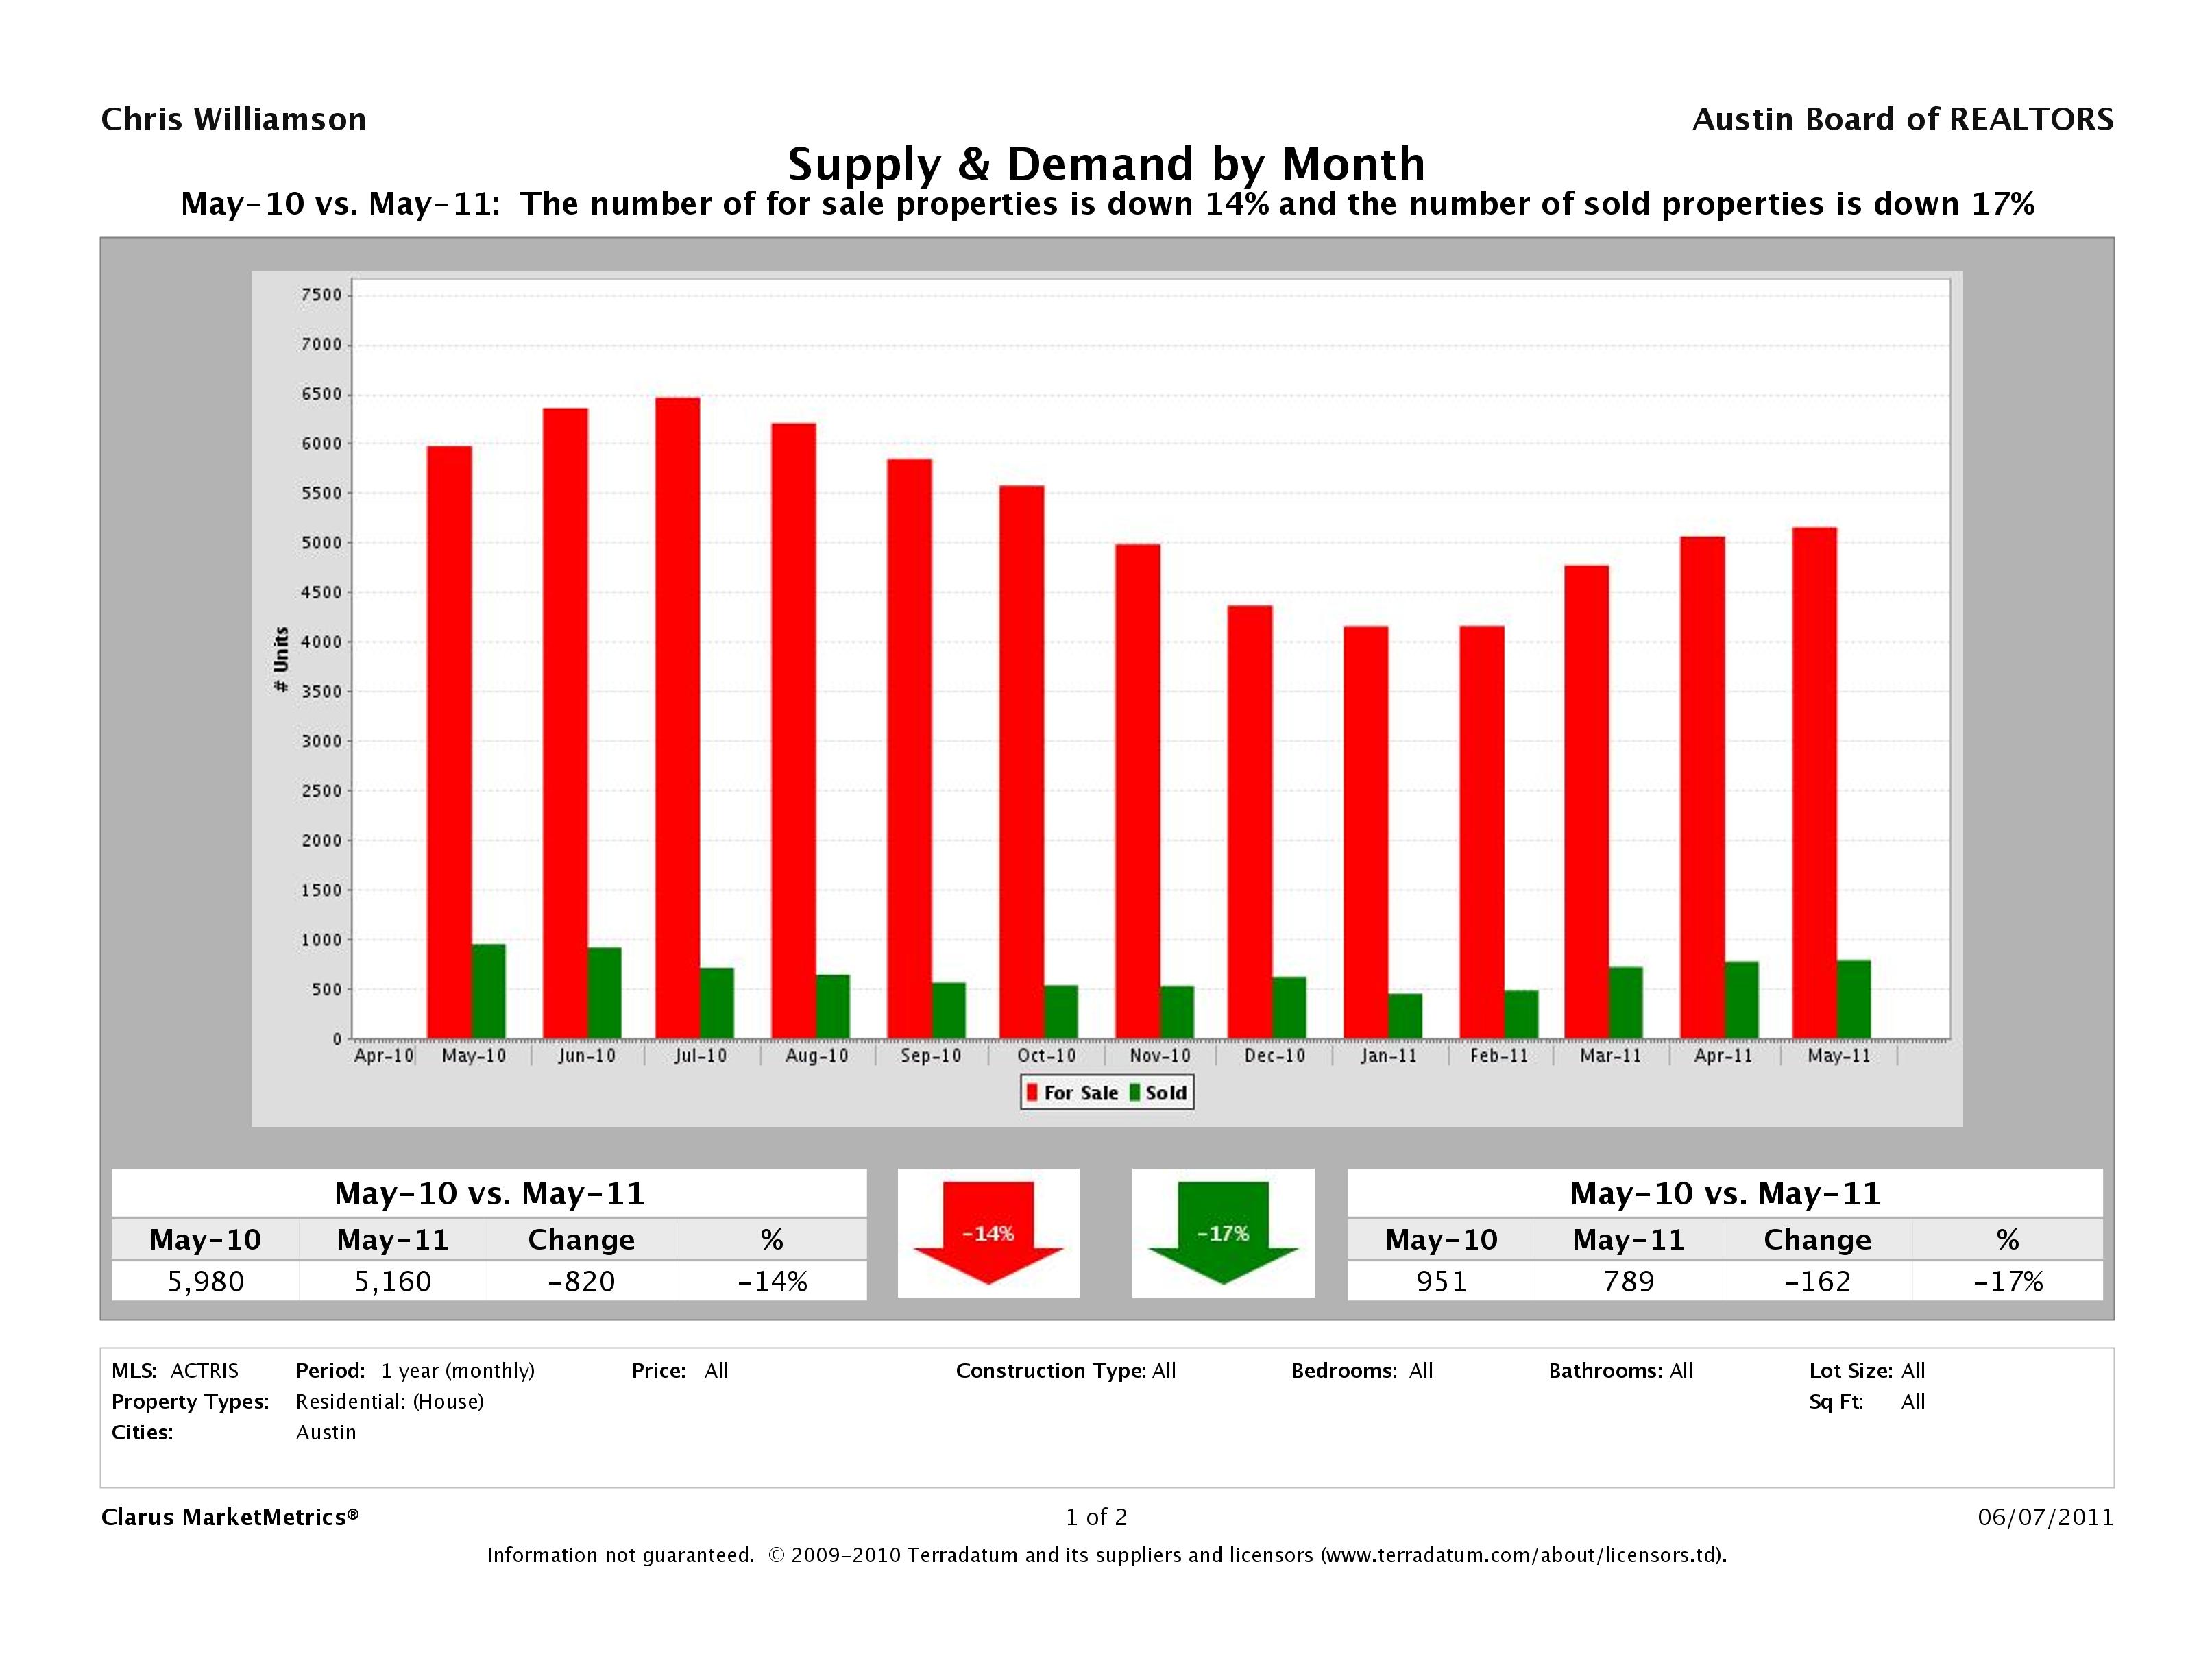 Austin real estate market supply and demand may 2011